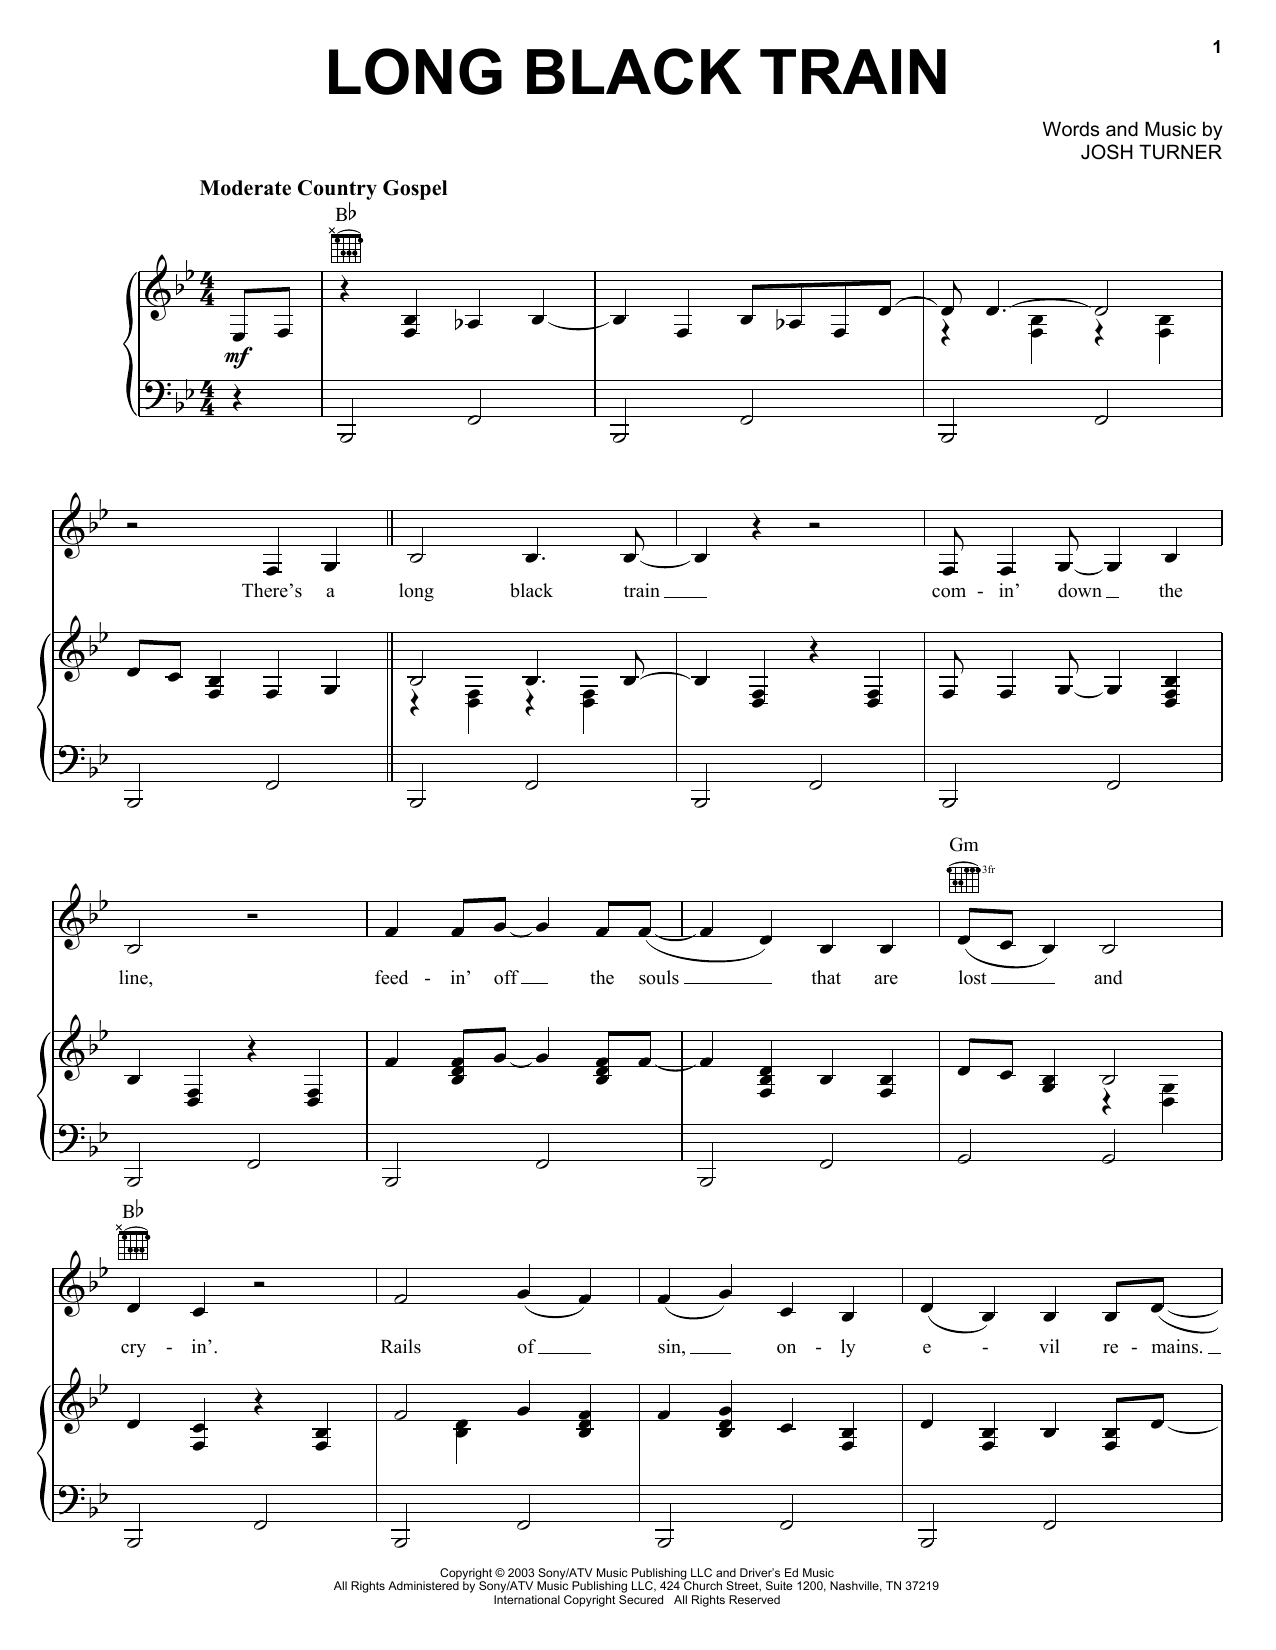 Josh Turner Long Black Train Sheet Music Notes & Chords for Melody Line, Lyrics & Chords - Download or Print PDF